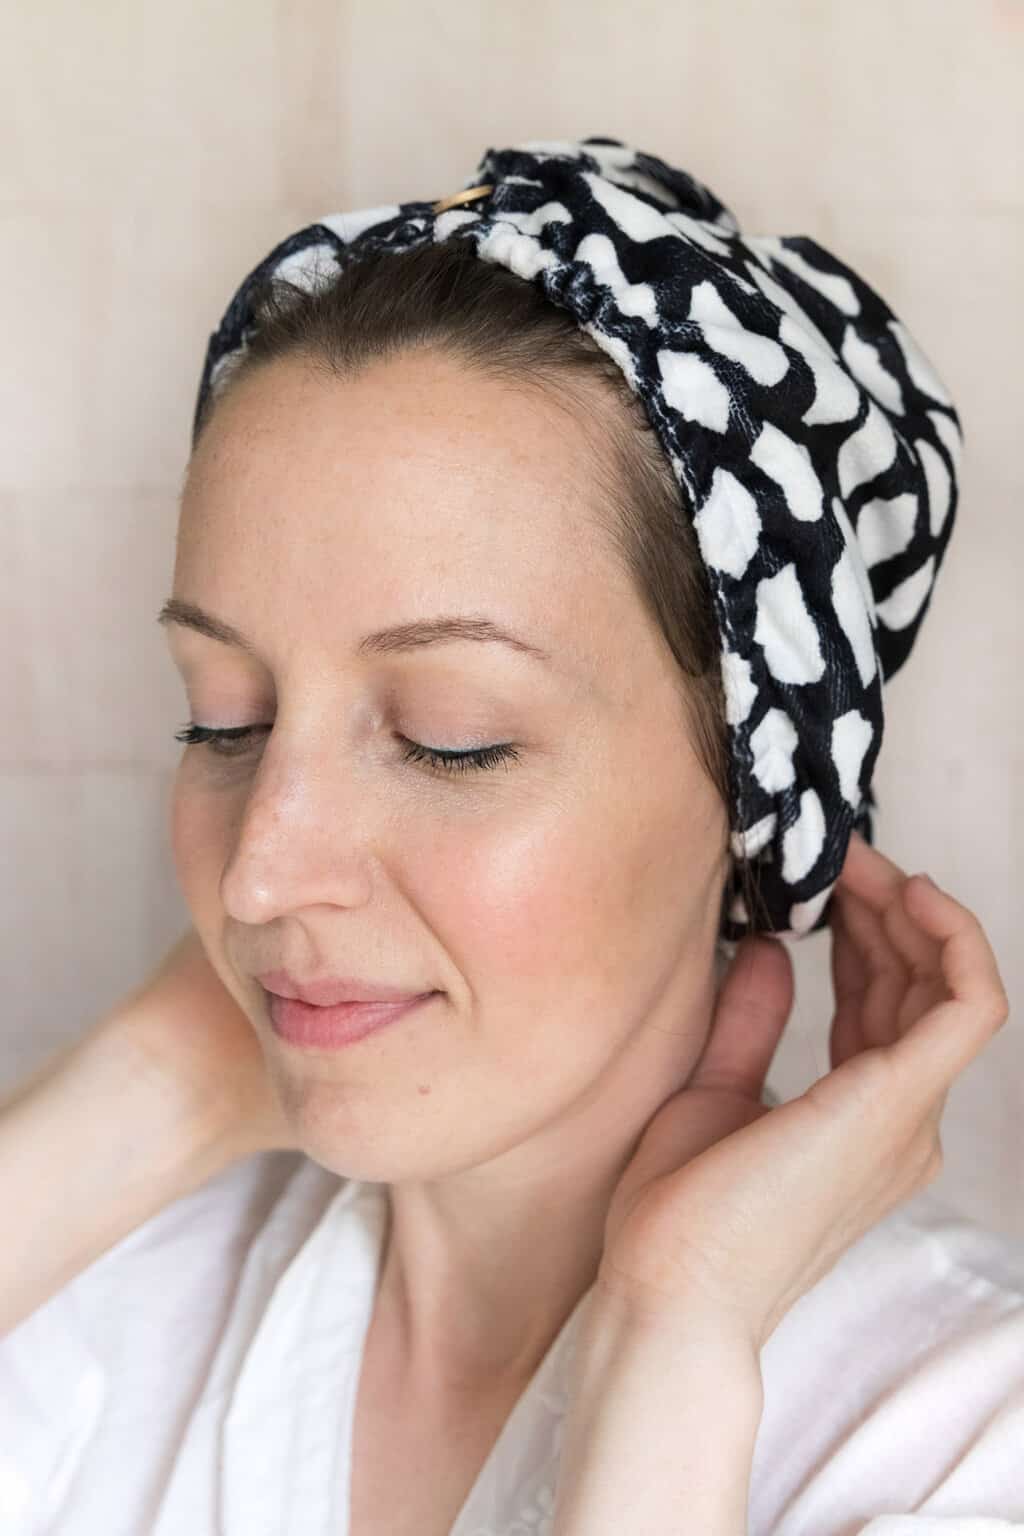 Wrap hair in warm towel or shower cap to enhance a hot oil hair treatment